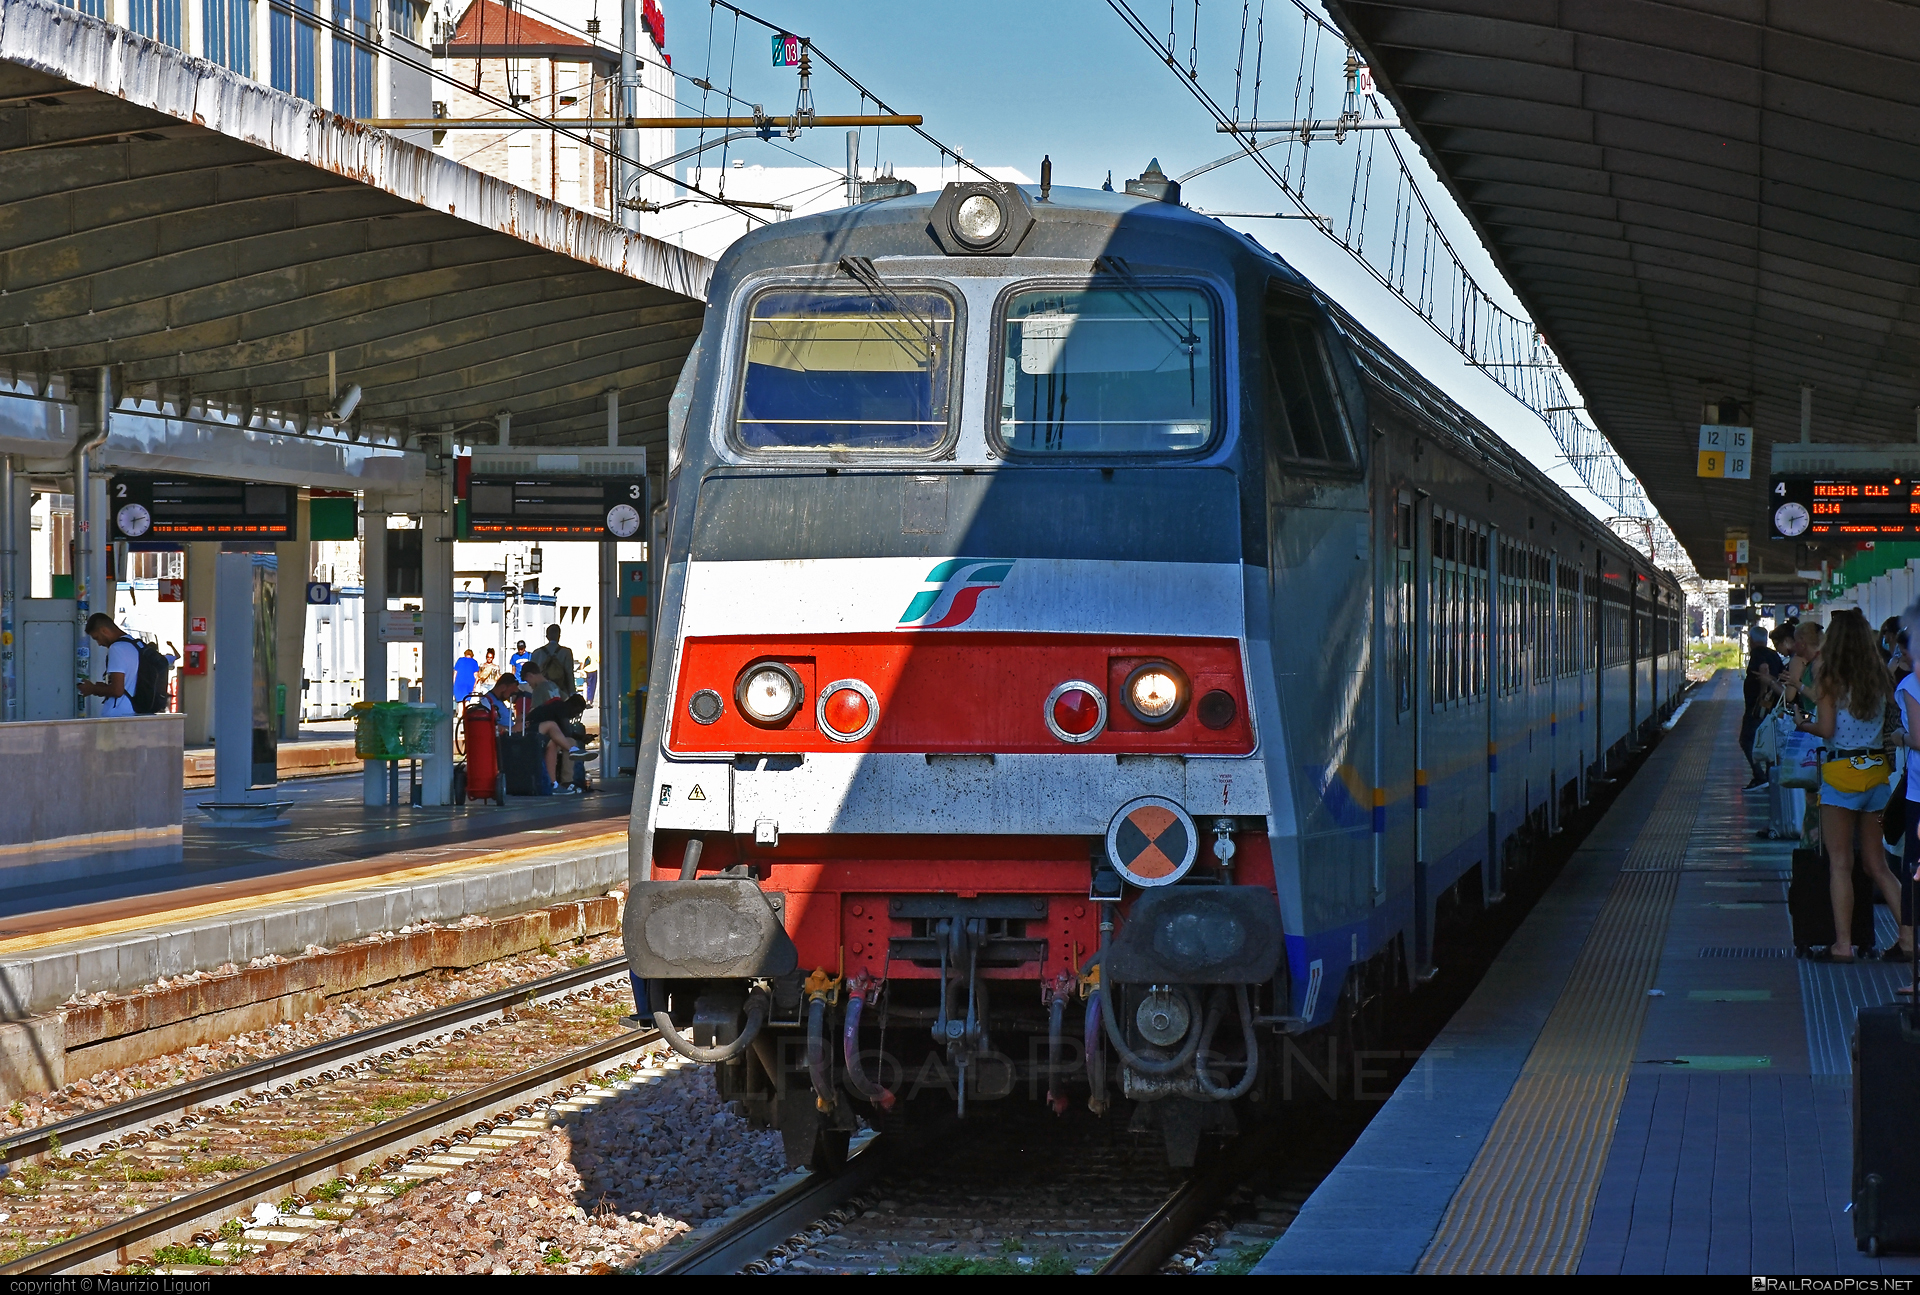 Class B - MDVC semi-pilot - 82-87 077-7 operated by Trenitalia S.p.A. #ferroviedellostato #fs #fsitaliane #mdvc #trenitalia #trenitaliaspa